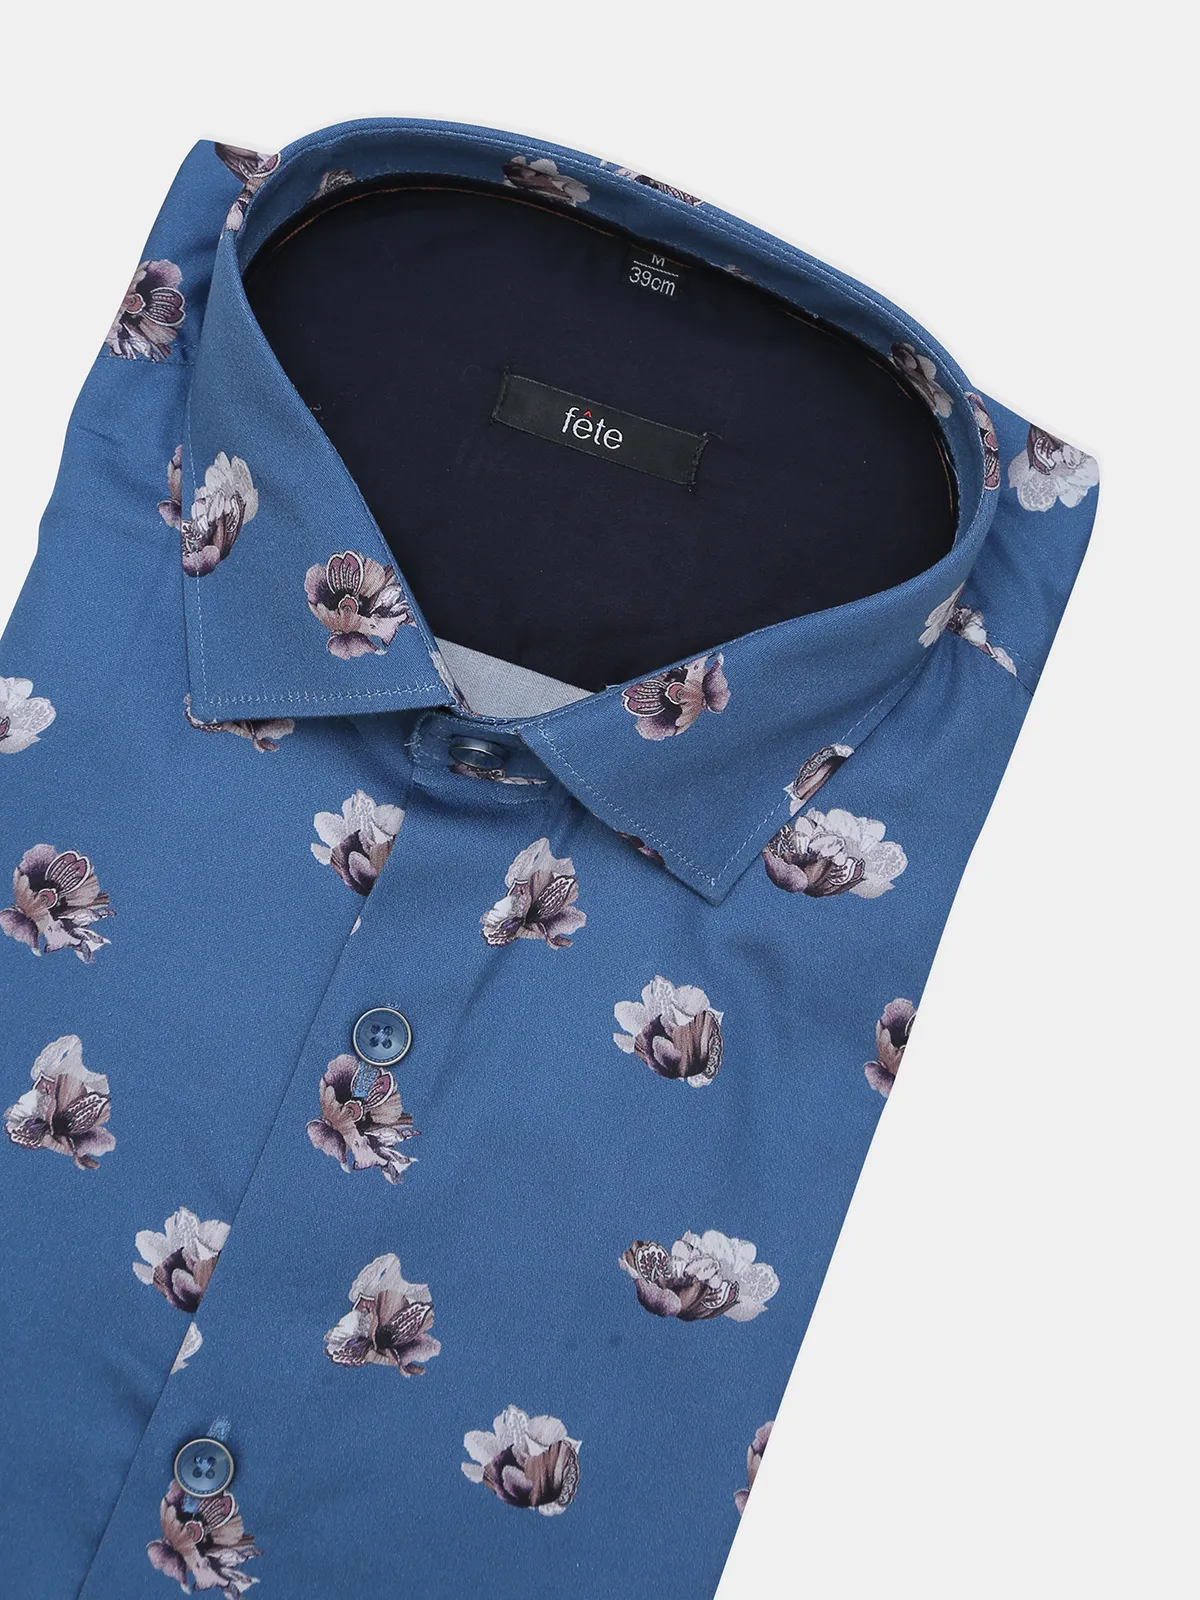 Fete formal wear blue printed shirt